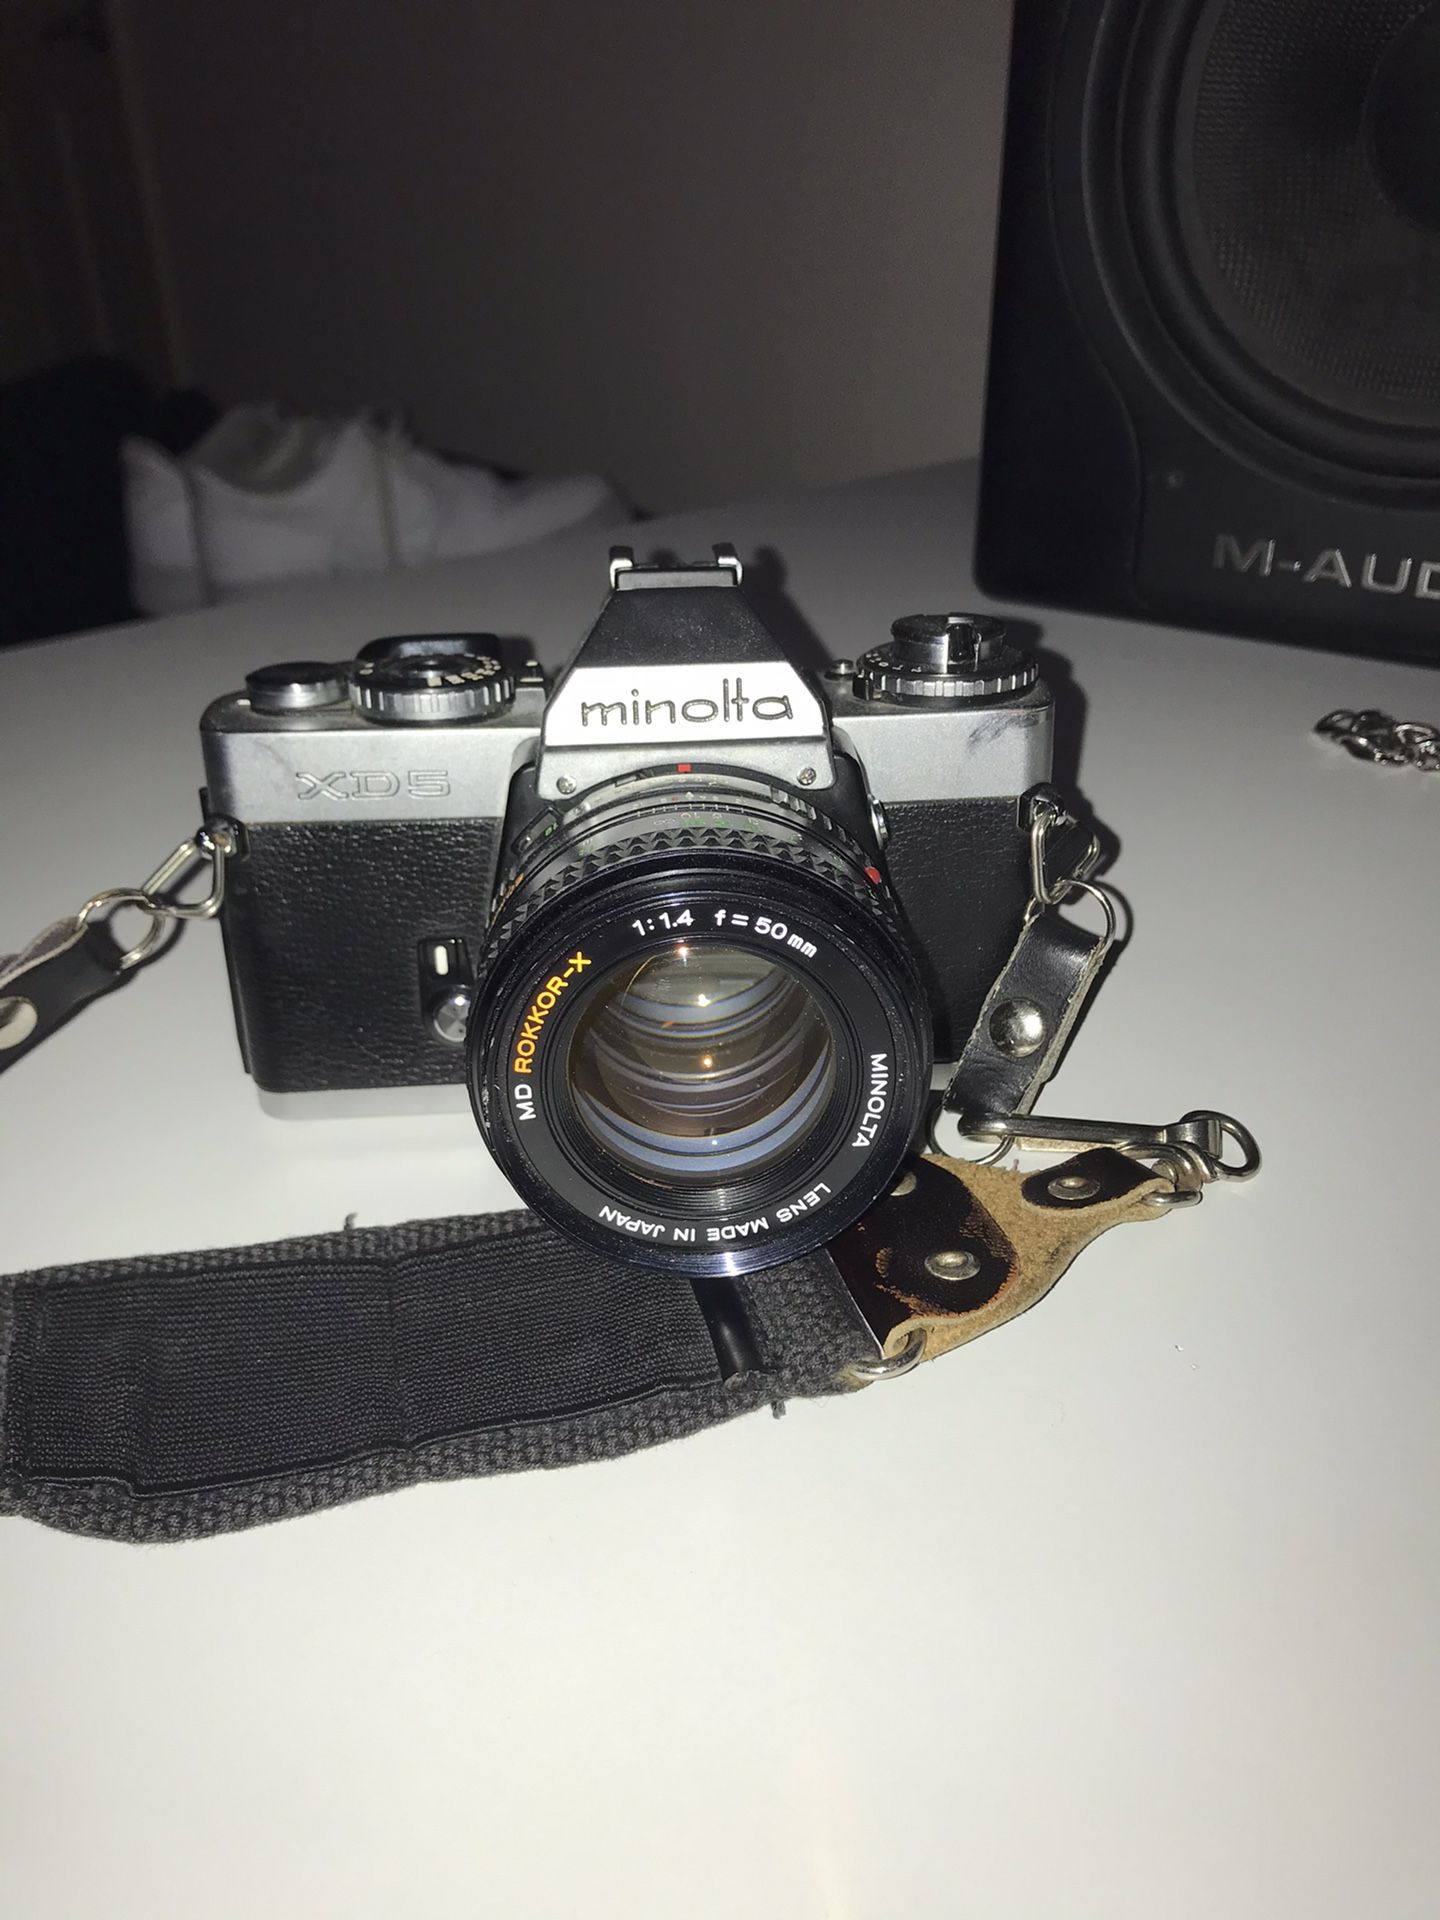 Minolta XD-5, 50mm Lens, f:1.4